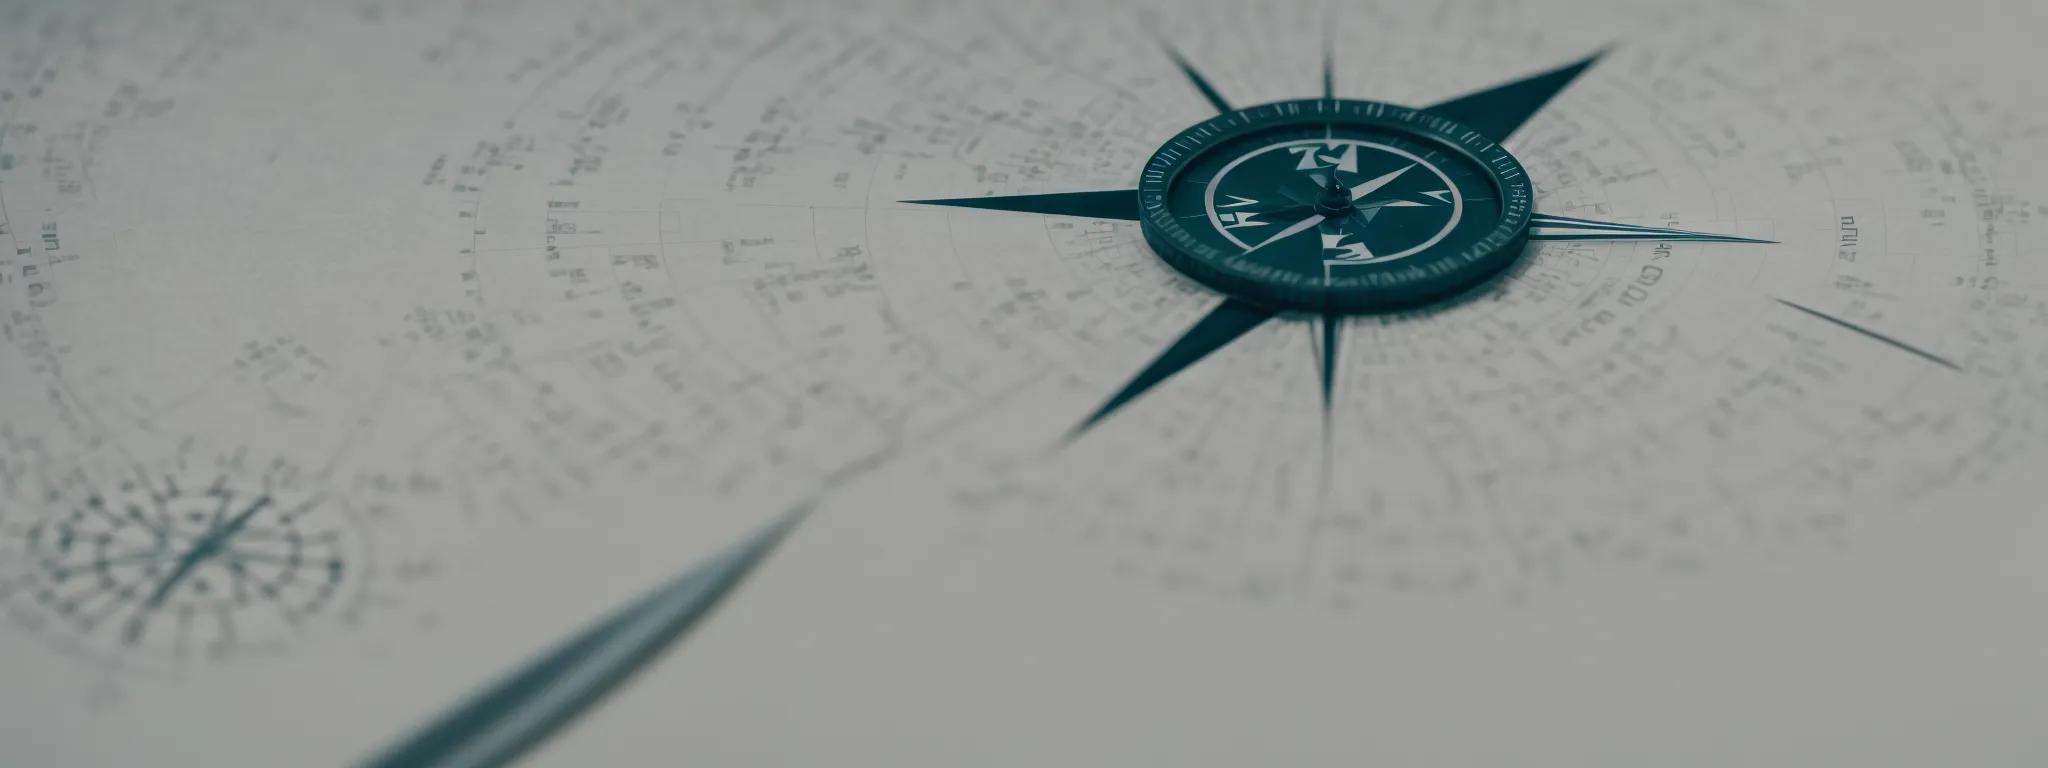 a compass lying atop a webpage blueprint represents the strategic navigation through a website’s content via internal linking.